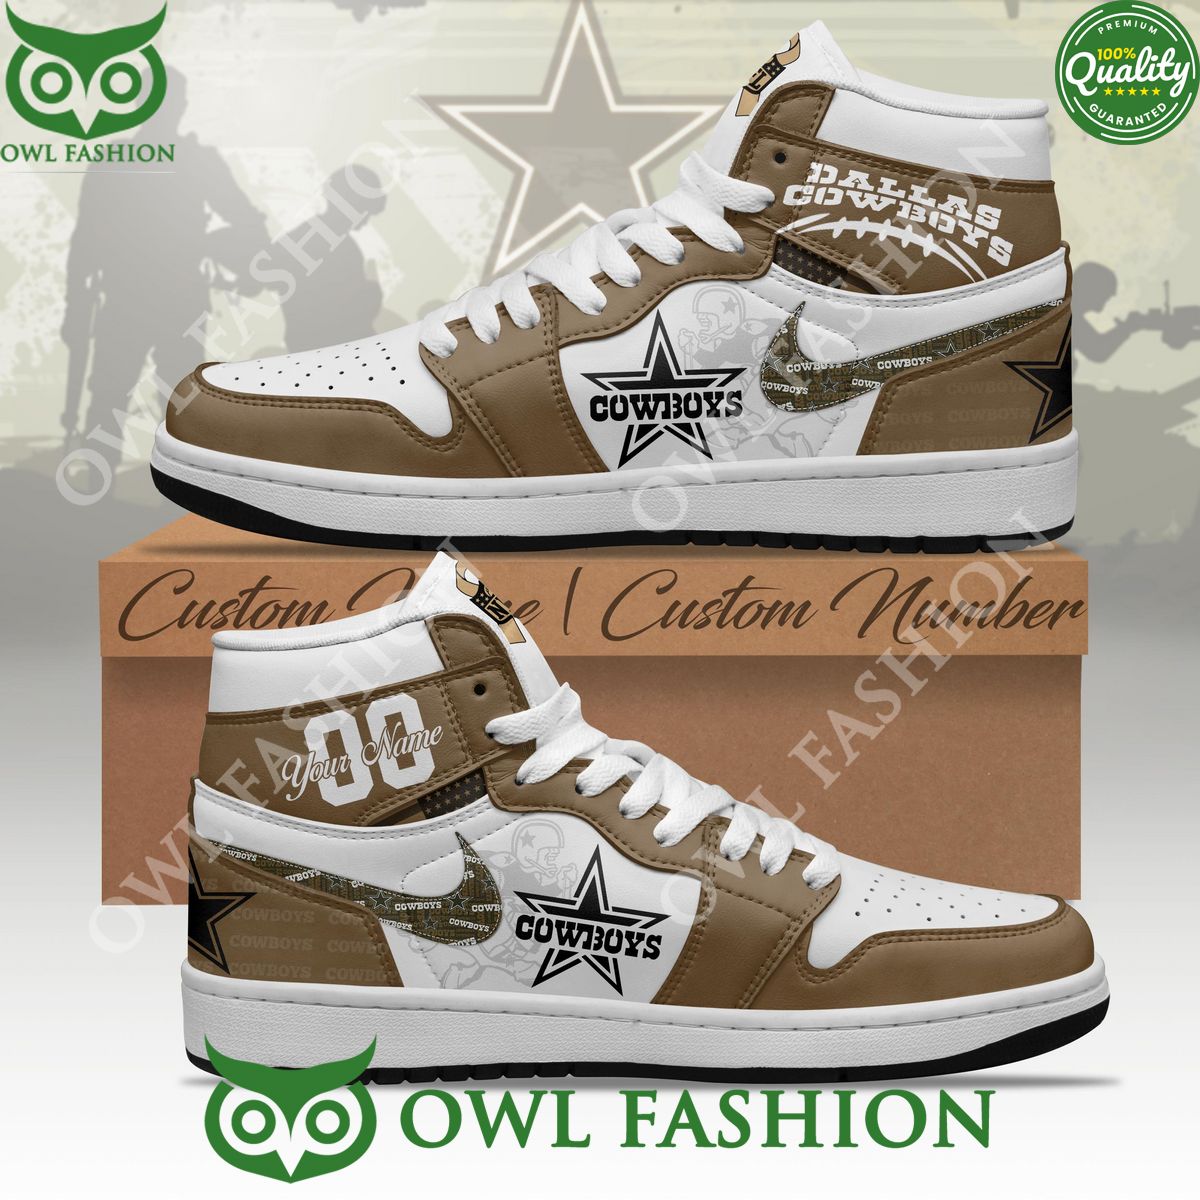 Camouflage Dallas Cowboys NFL Veterans Air Jordan High Top Shoes Limited